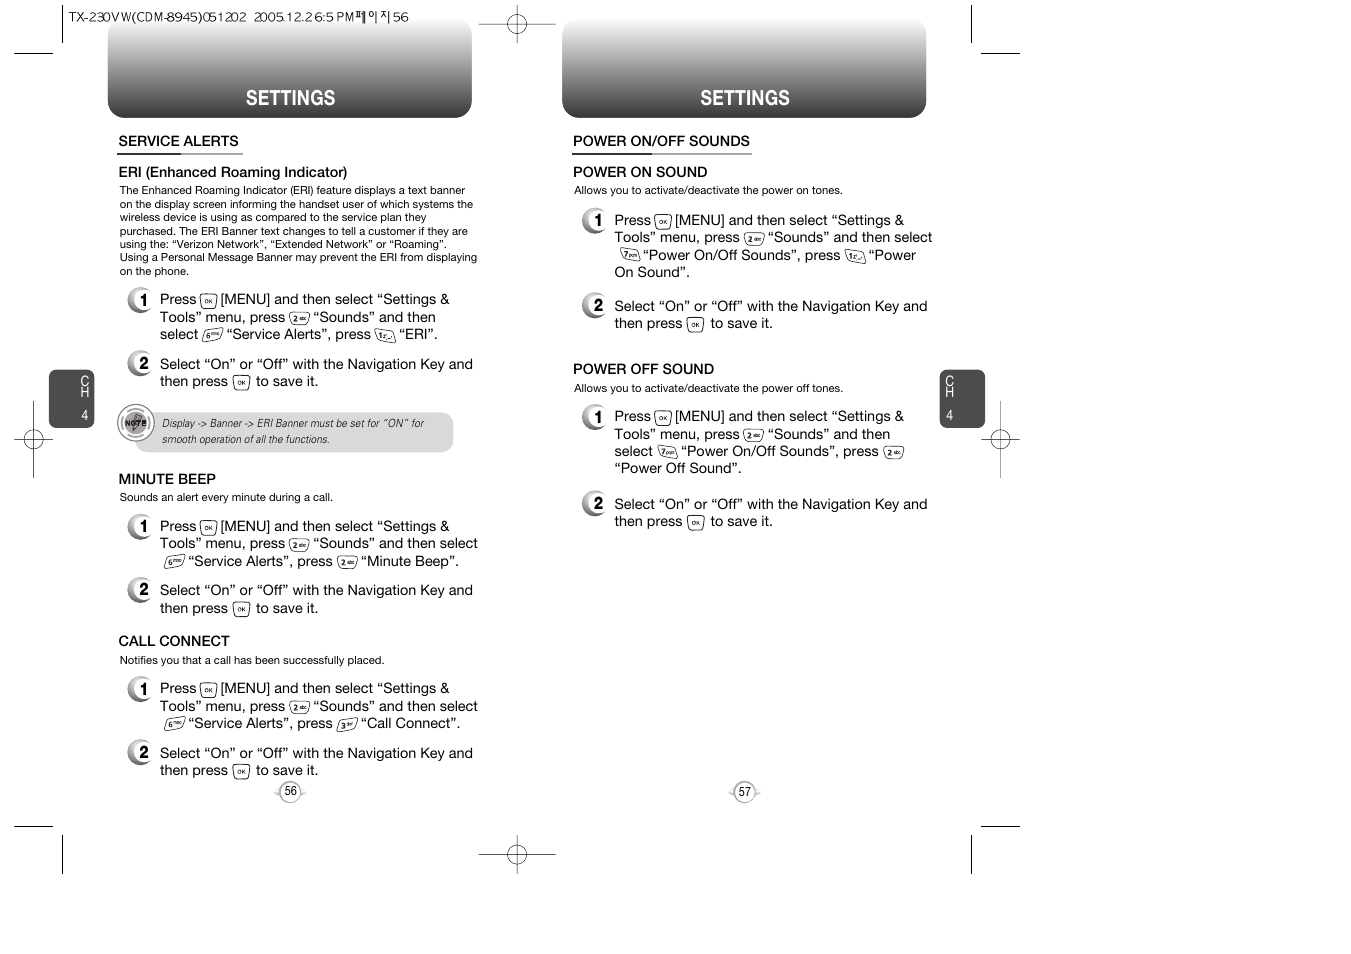 Settings | UTStarcom CDM8945 User Manual | Page 29 / 75